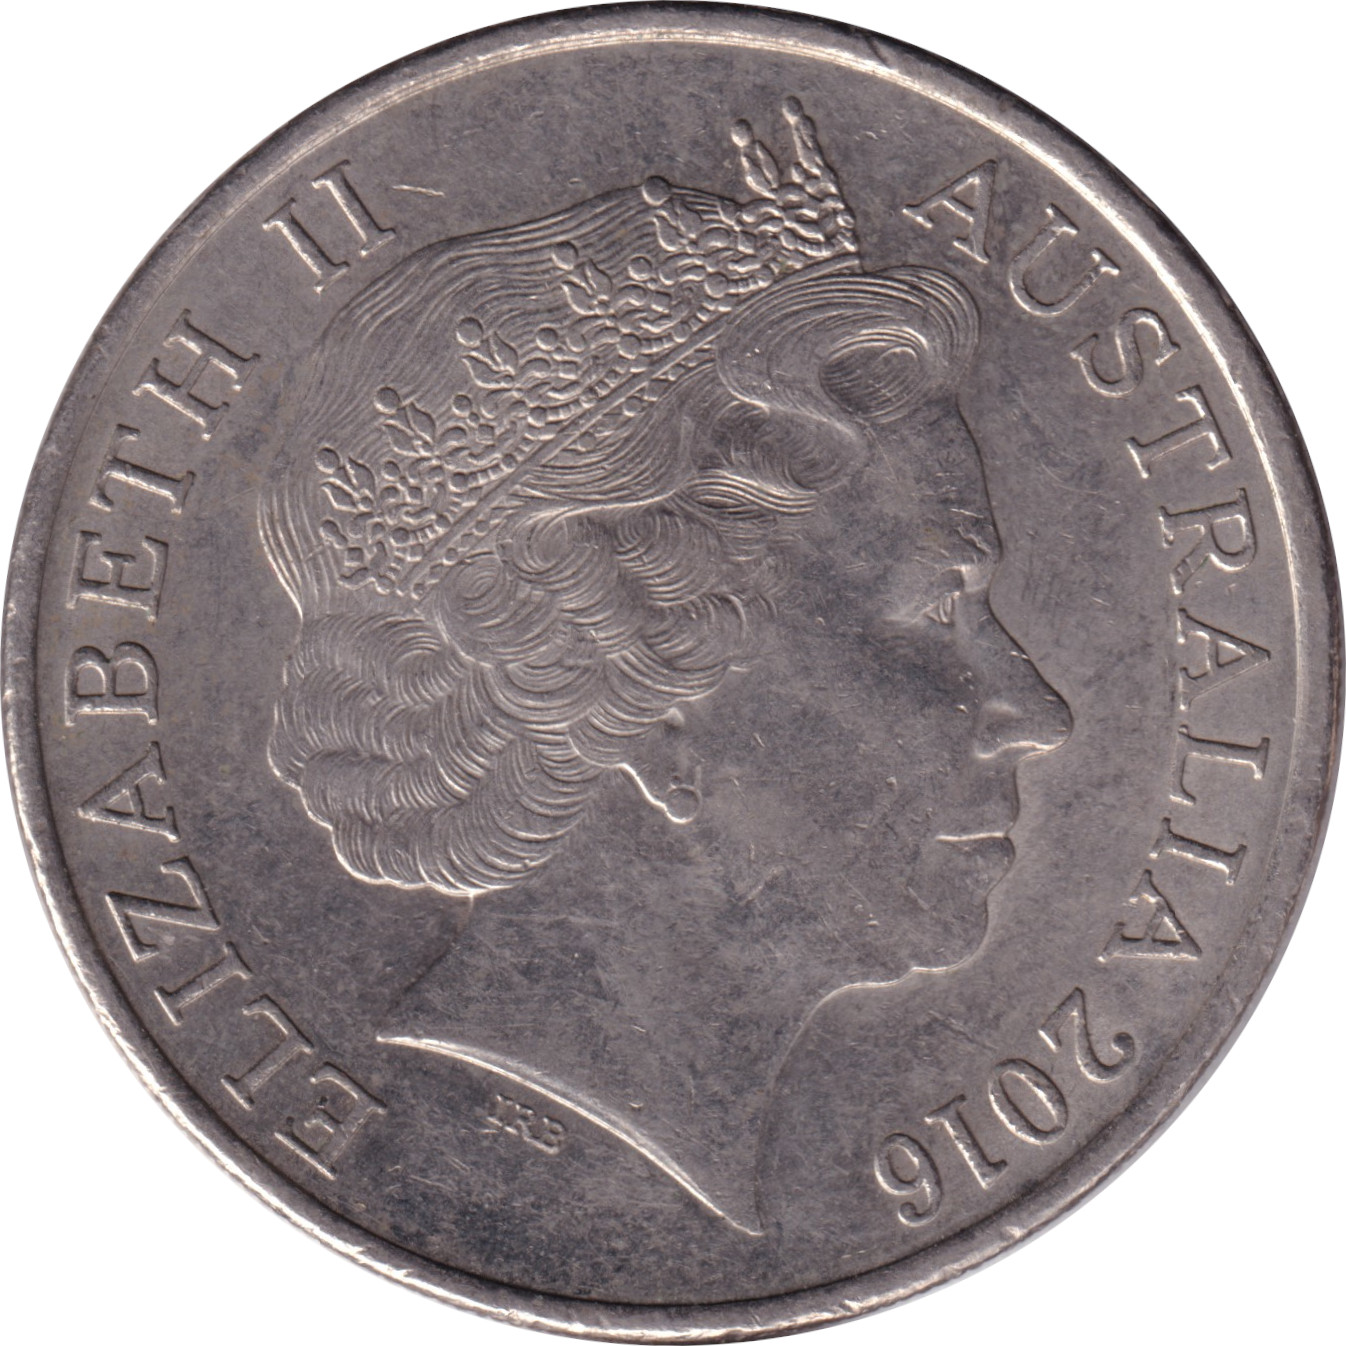 20 cents - Elizabeth II - Old head